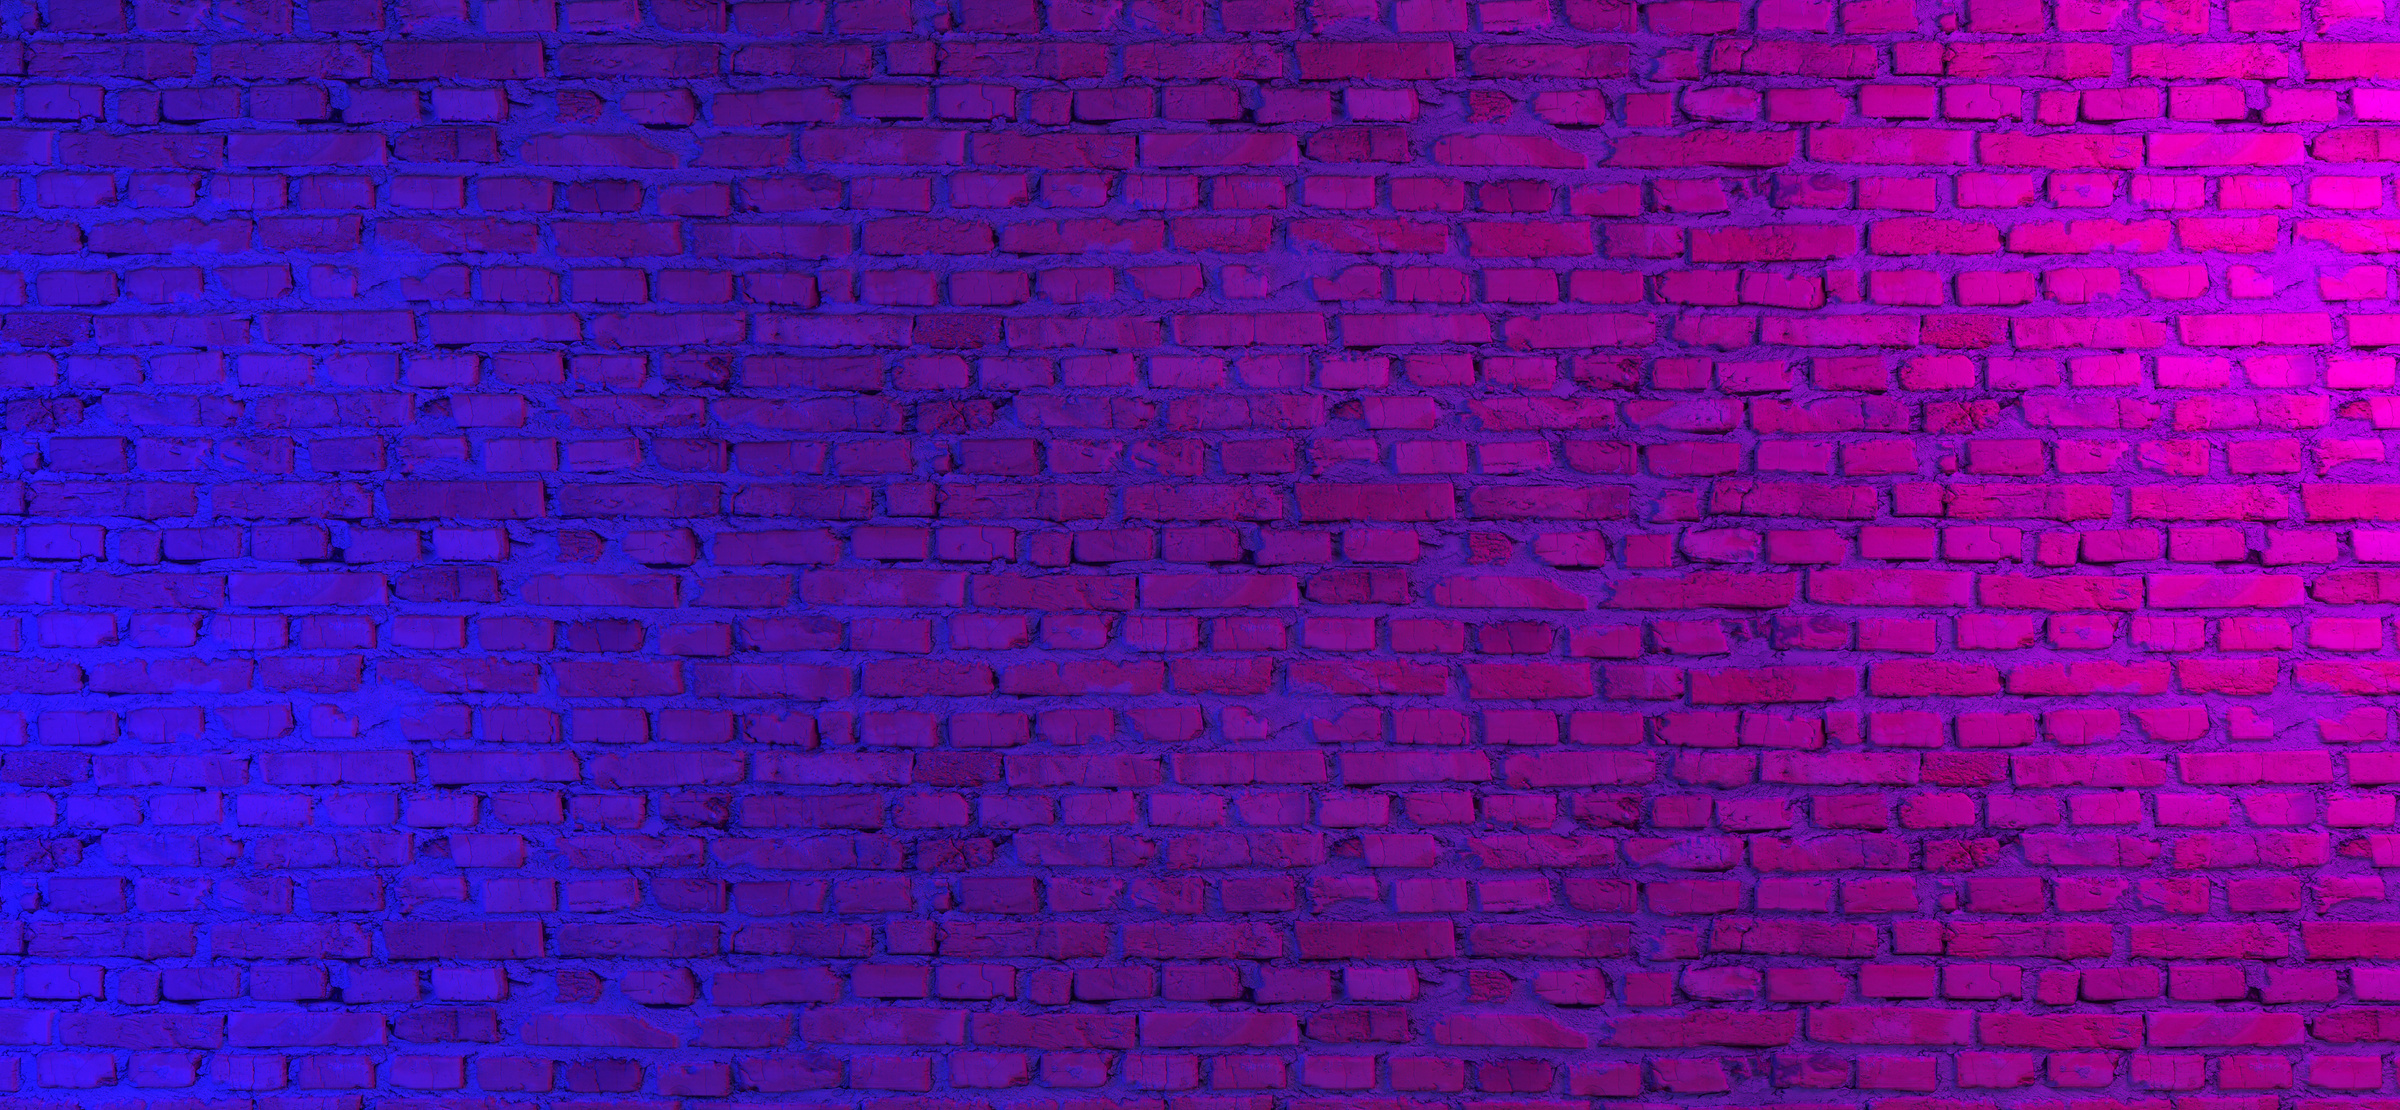 Neon Brick Wall